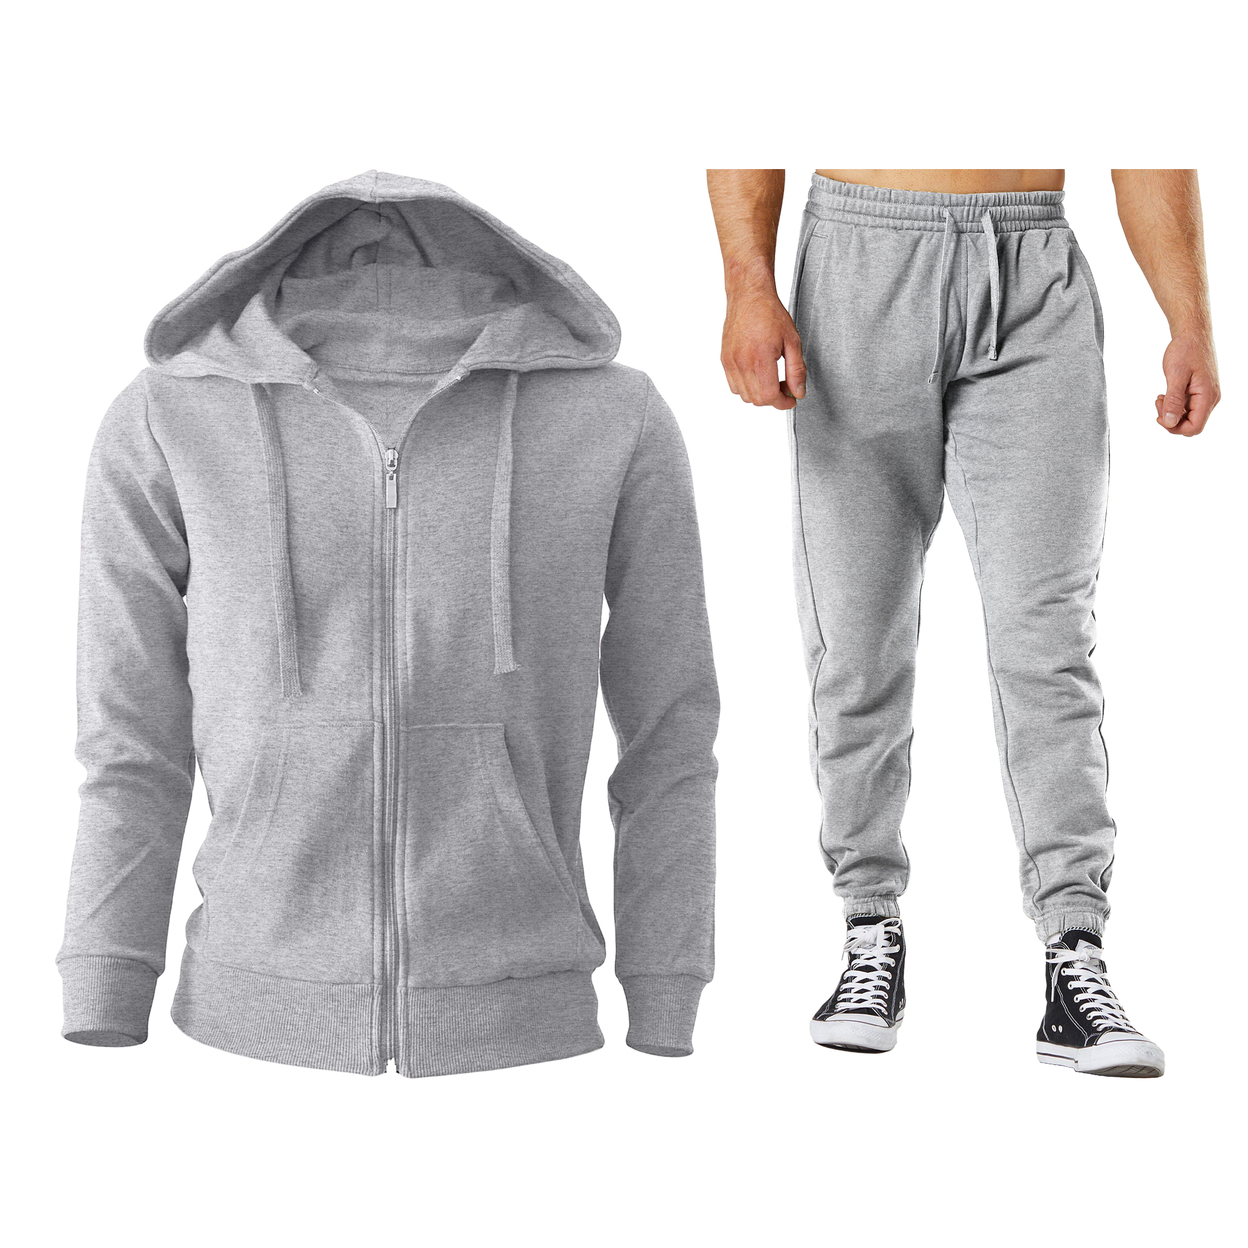 2/4-Piece: Men's Winter Warm Cozy Athletic Multi-Pockets BIG & TALL Sweatsuit Set - Grey, 1, Medium